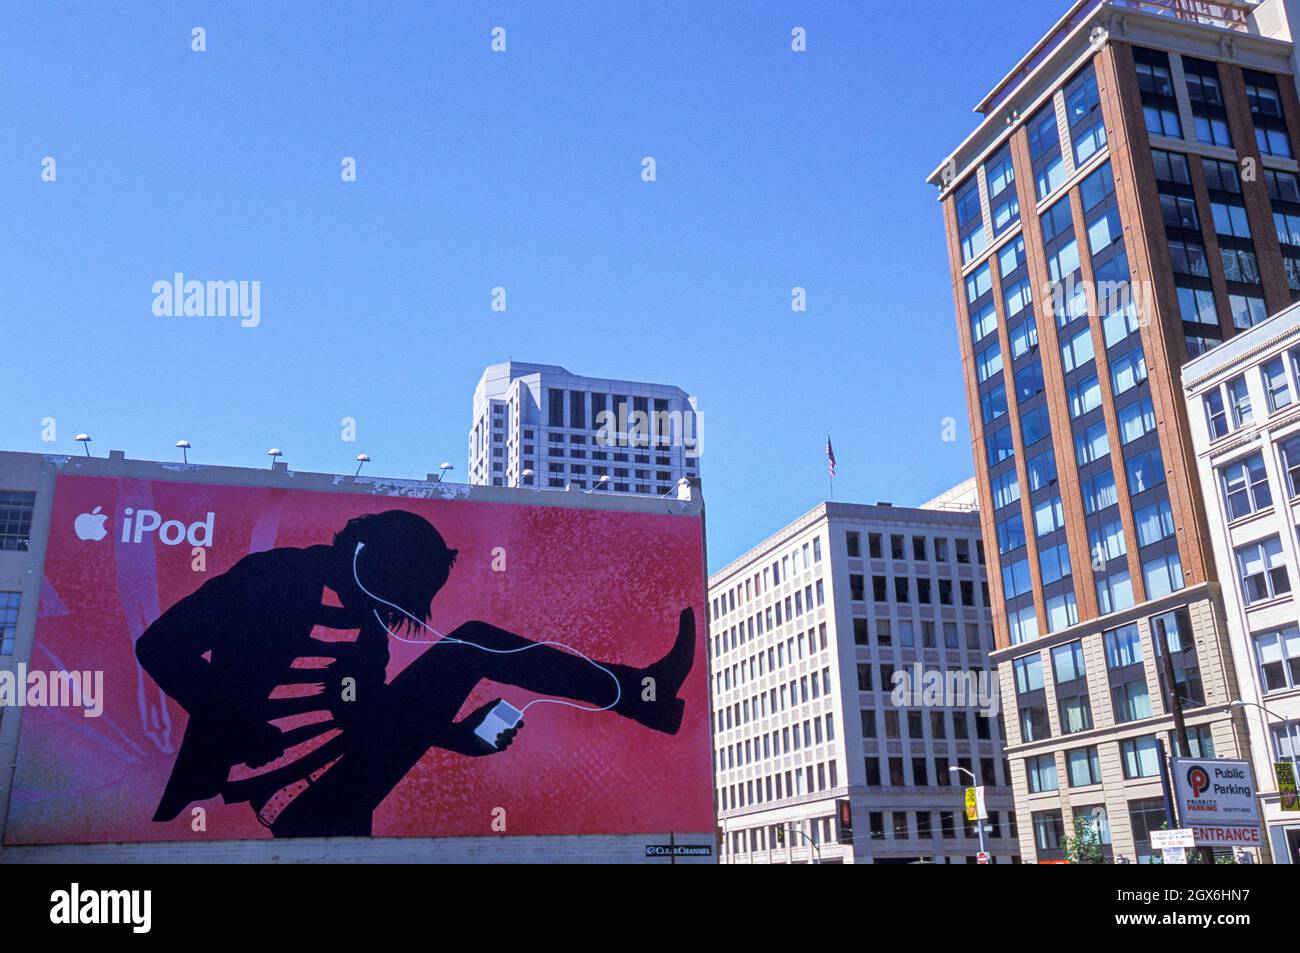 Apple iPod mural advertisement in San Francisco, California, USA Stock Photo